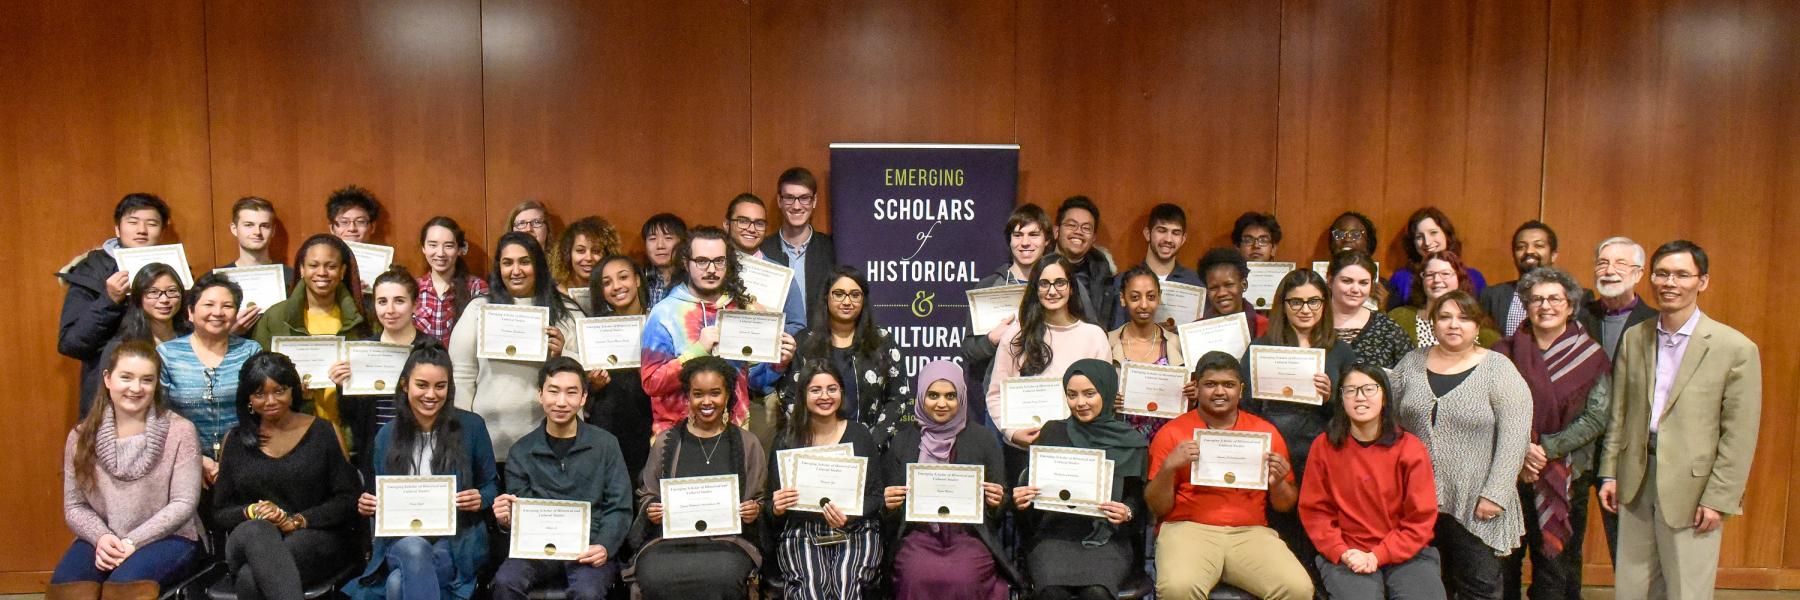 Group photo of HCS Emerging Scholars Award Recipients